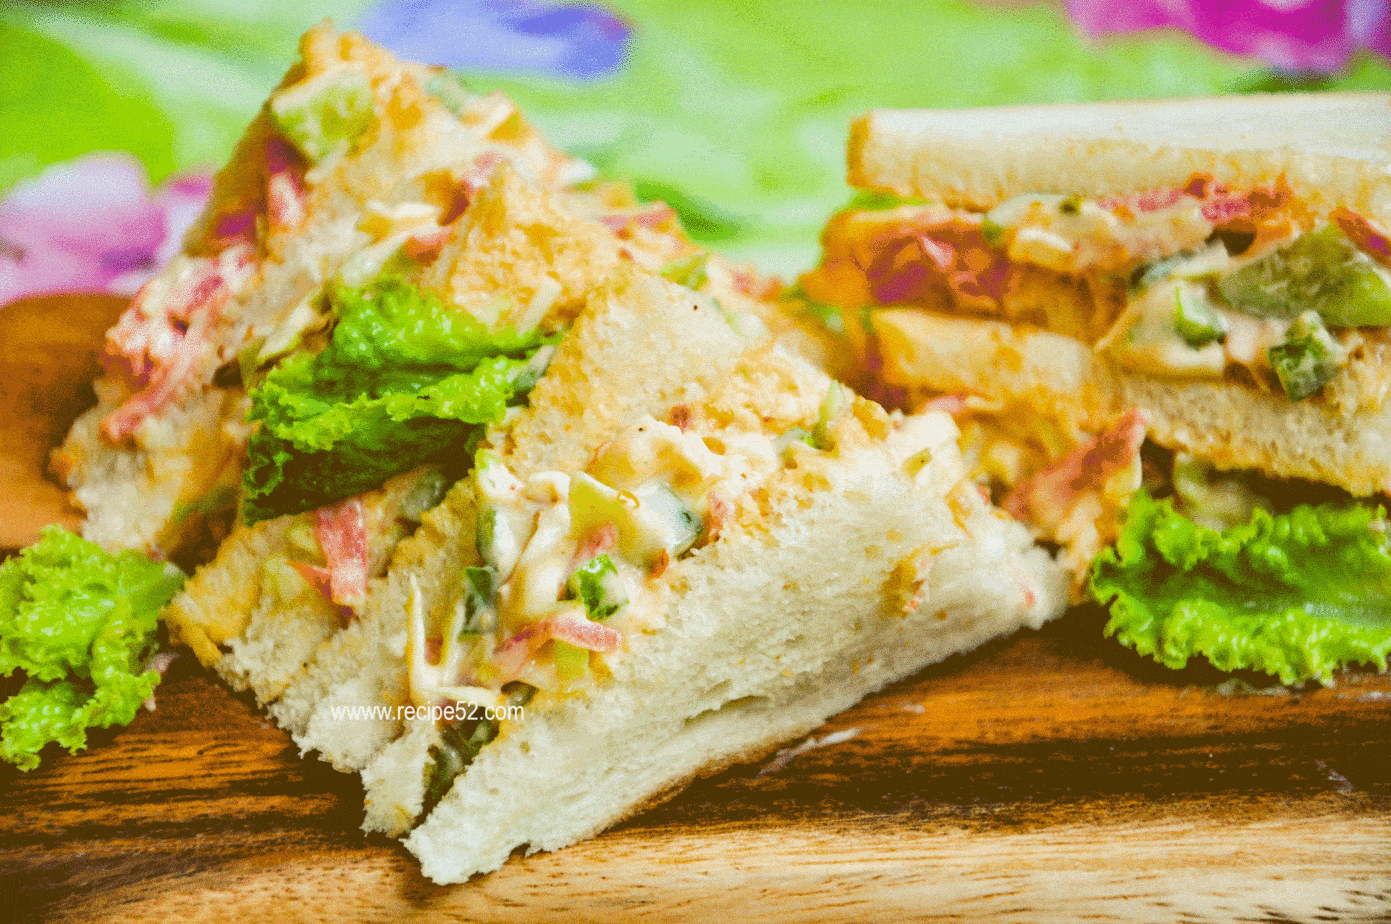 Vegetable-Salad-sandwich-1